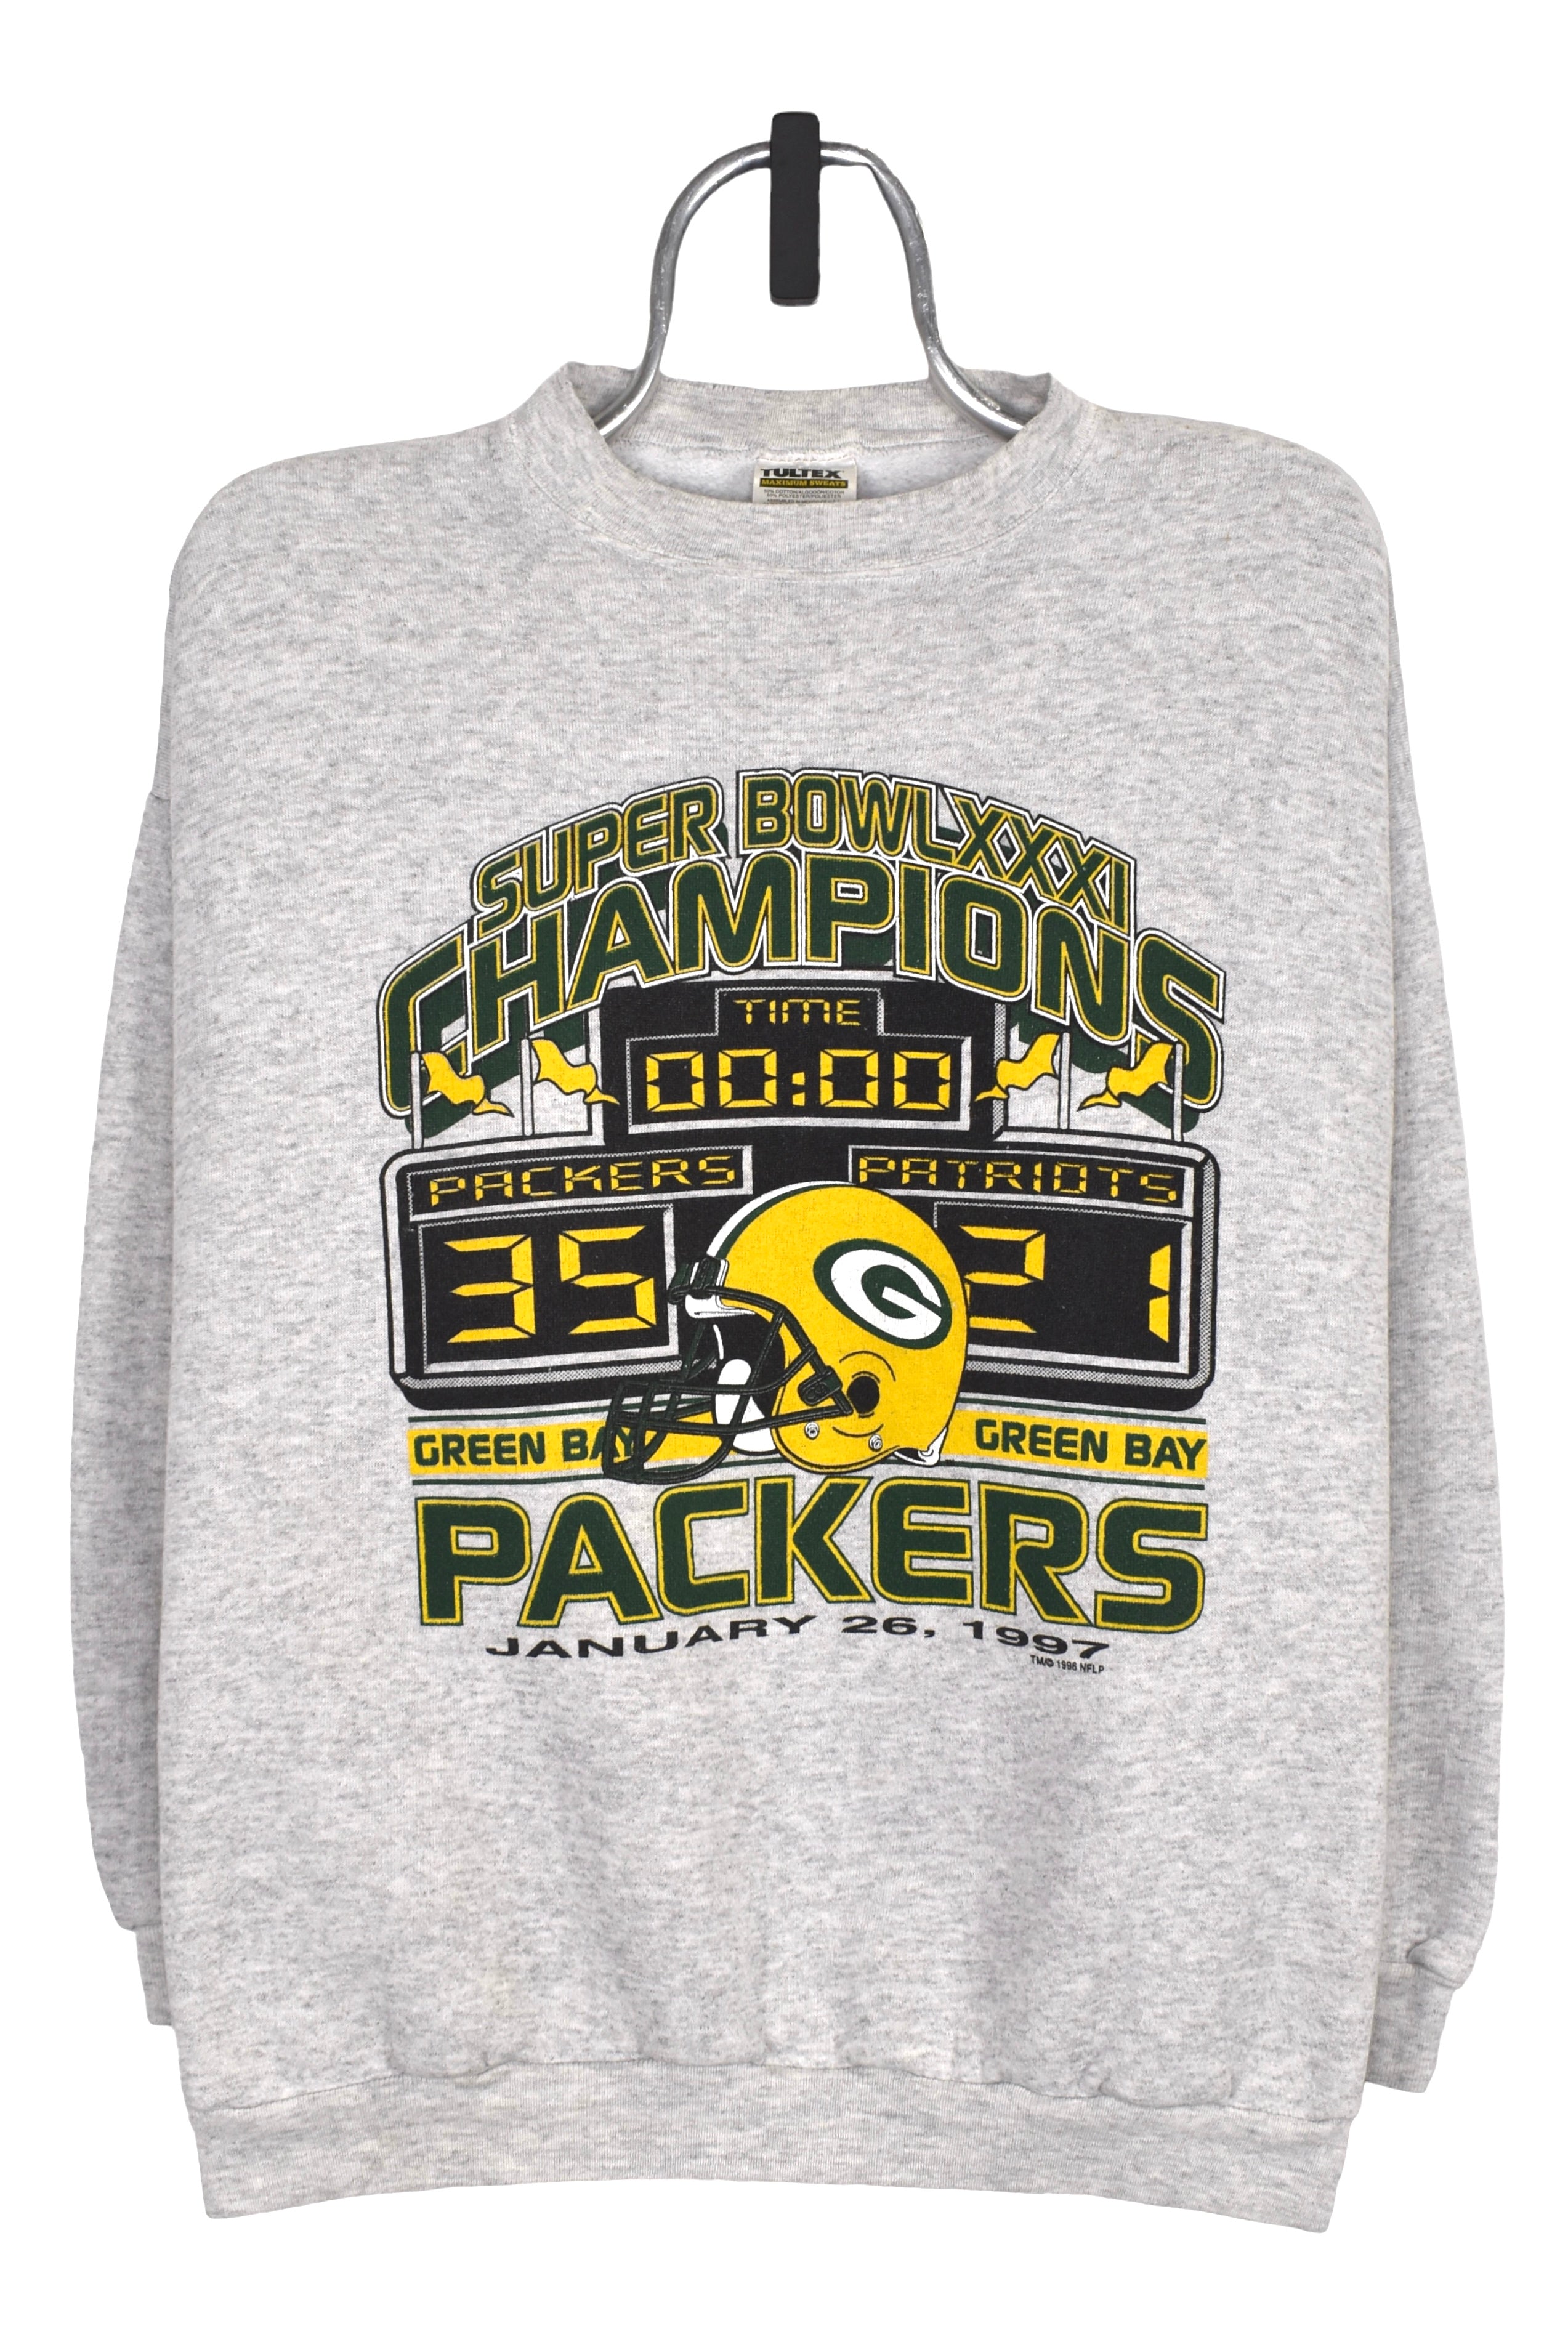 Vintage Green Bay Packers sweatshirt (L), 1996 grey graphic crewneck